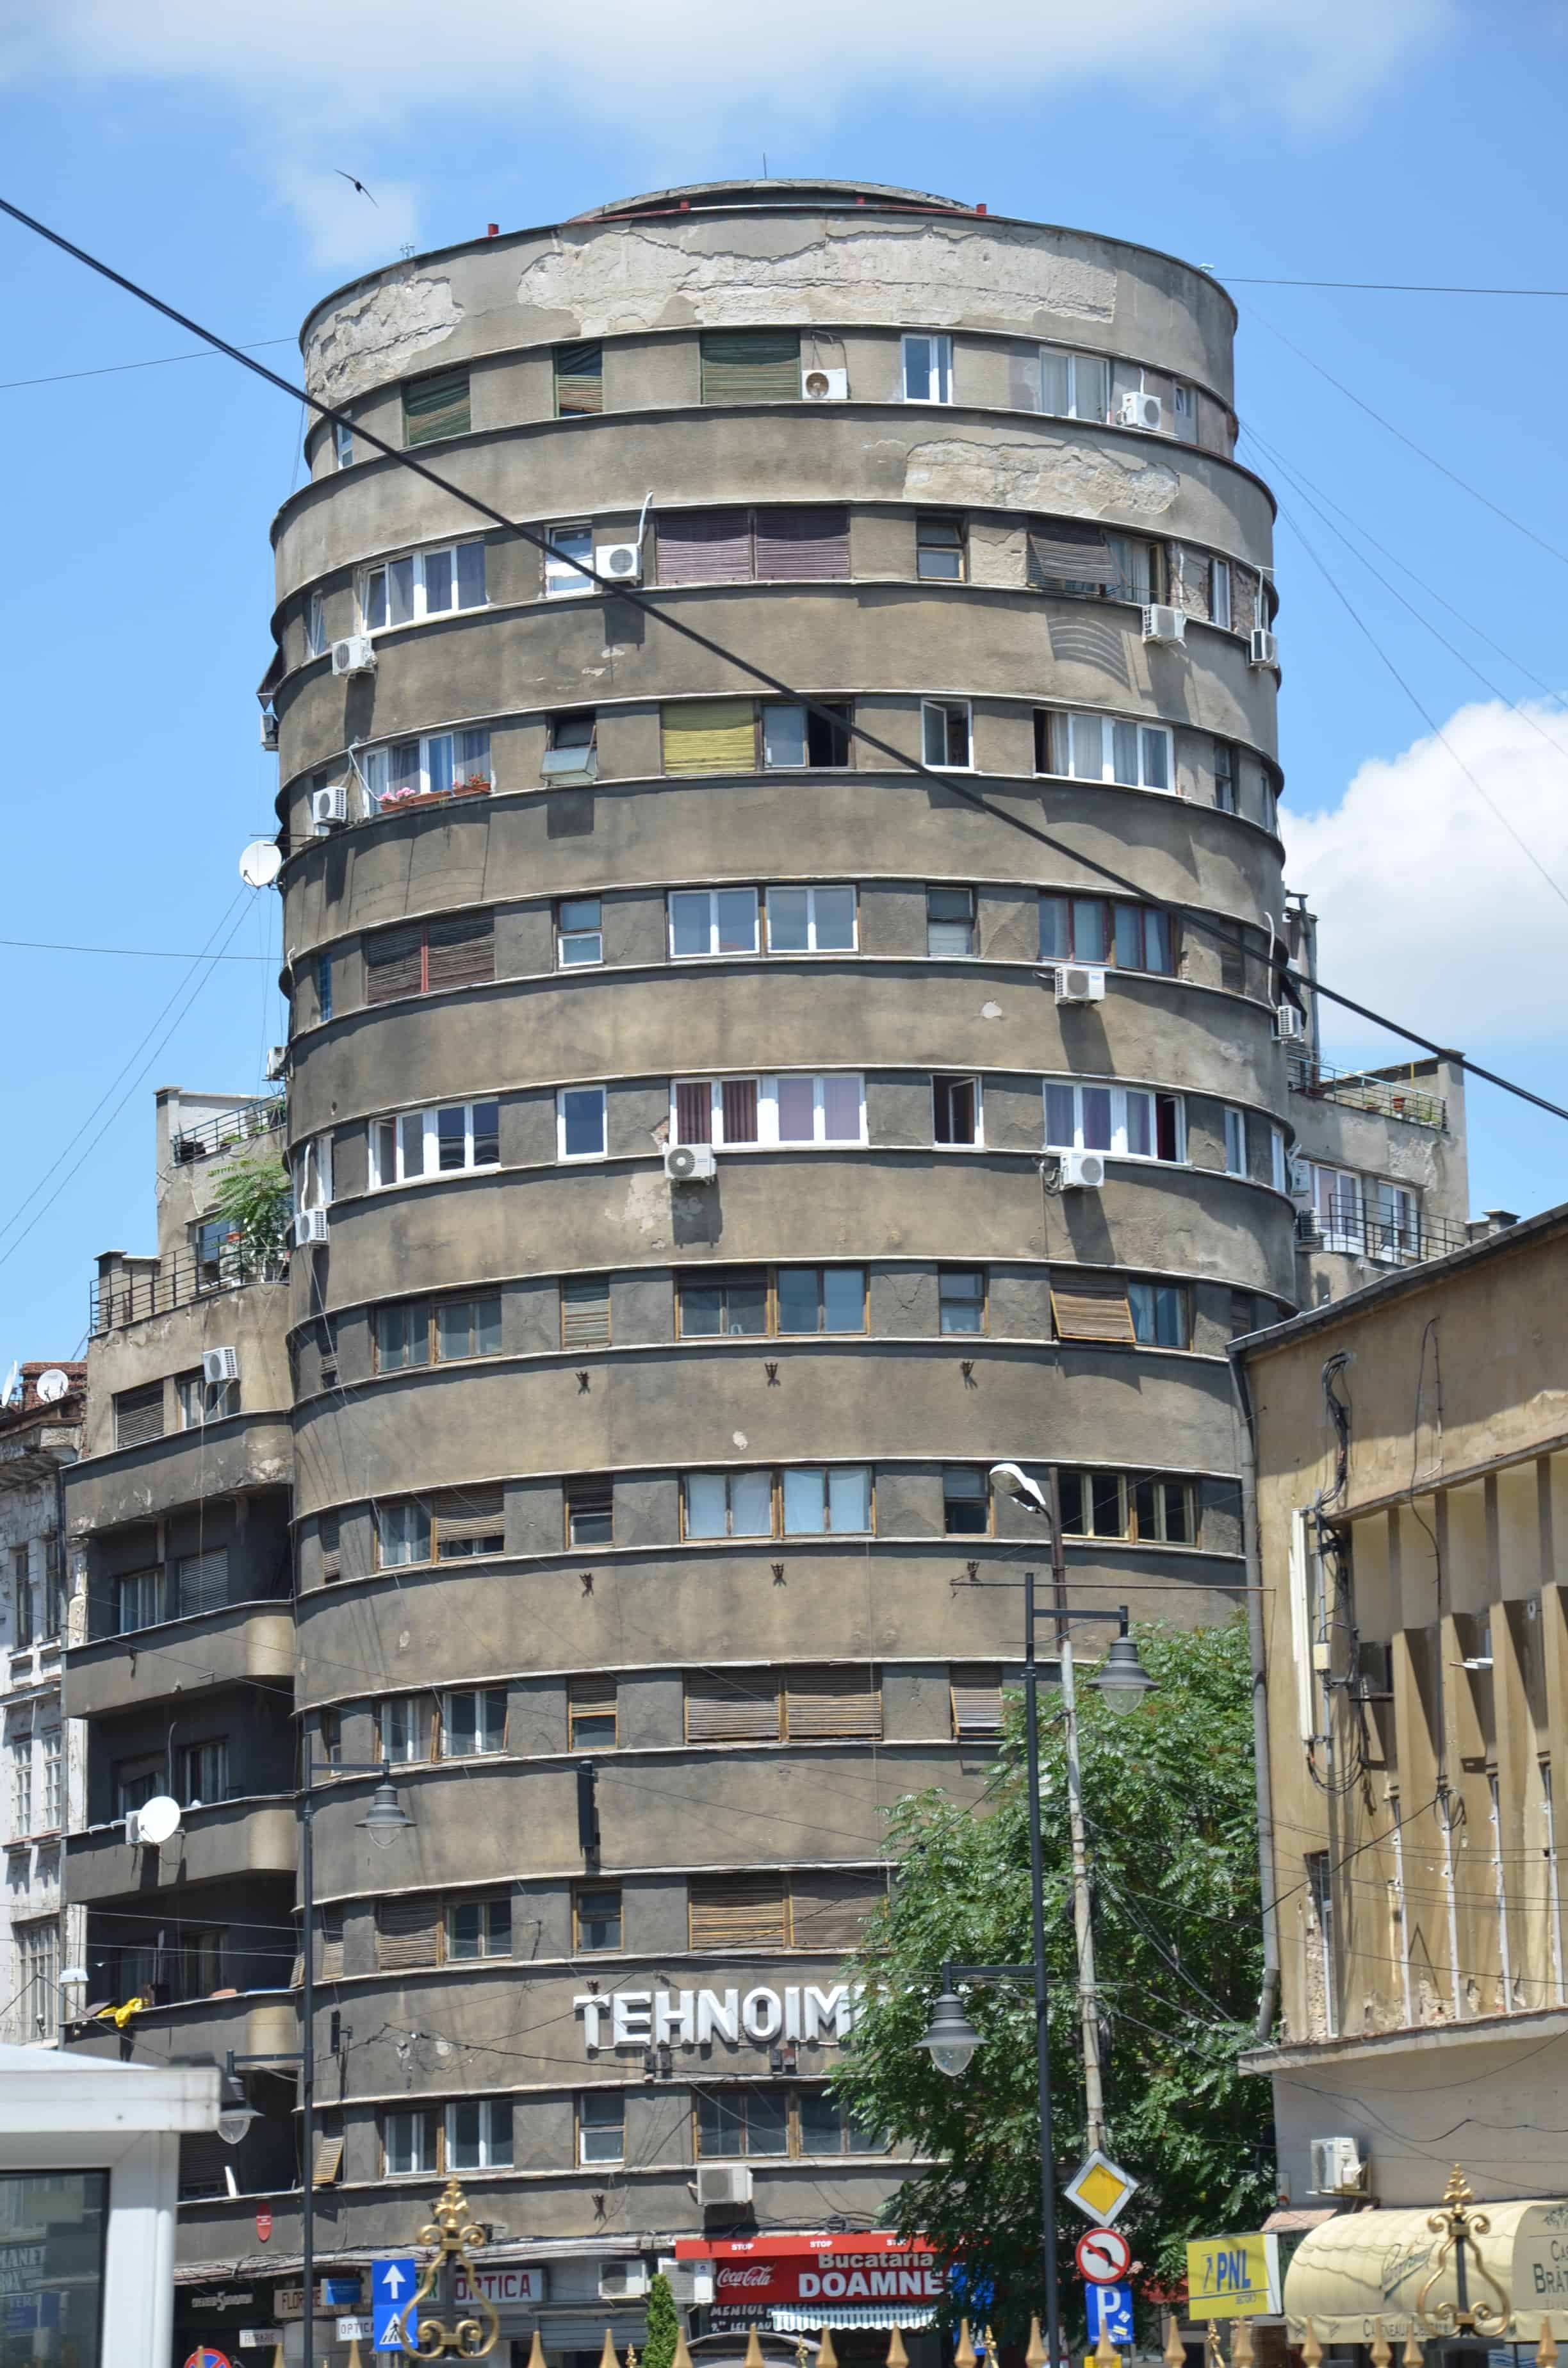 Tehnoimport Building in Bucharest, Romania